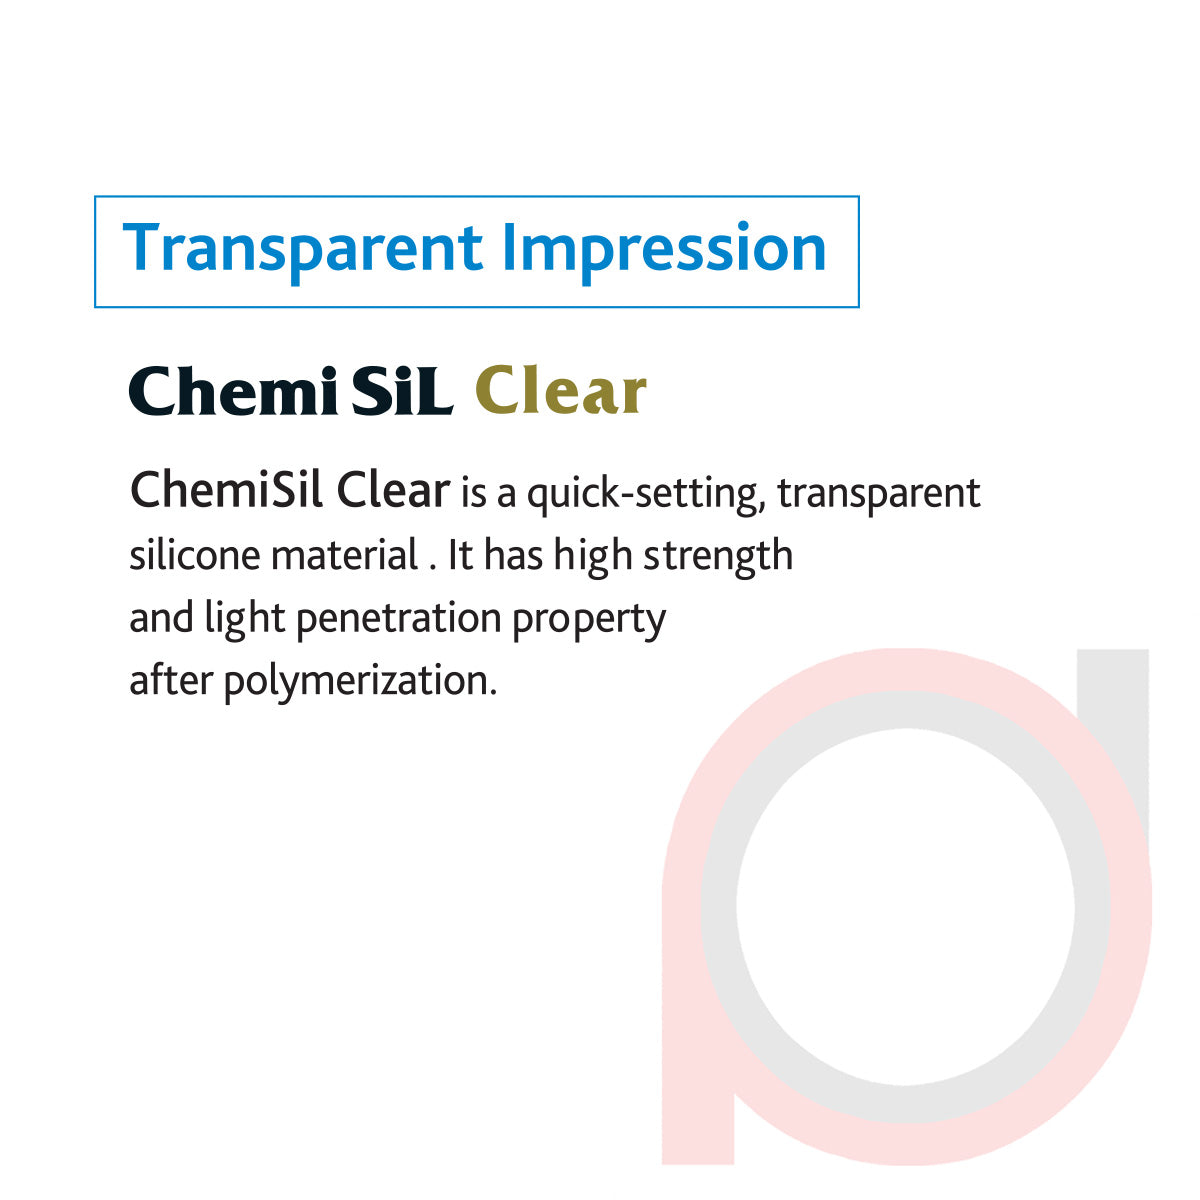 Chemi-Sil Clear